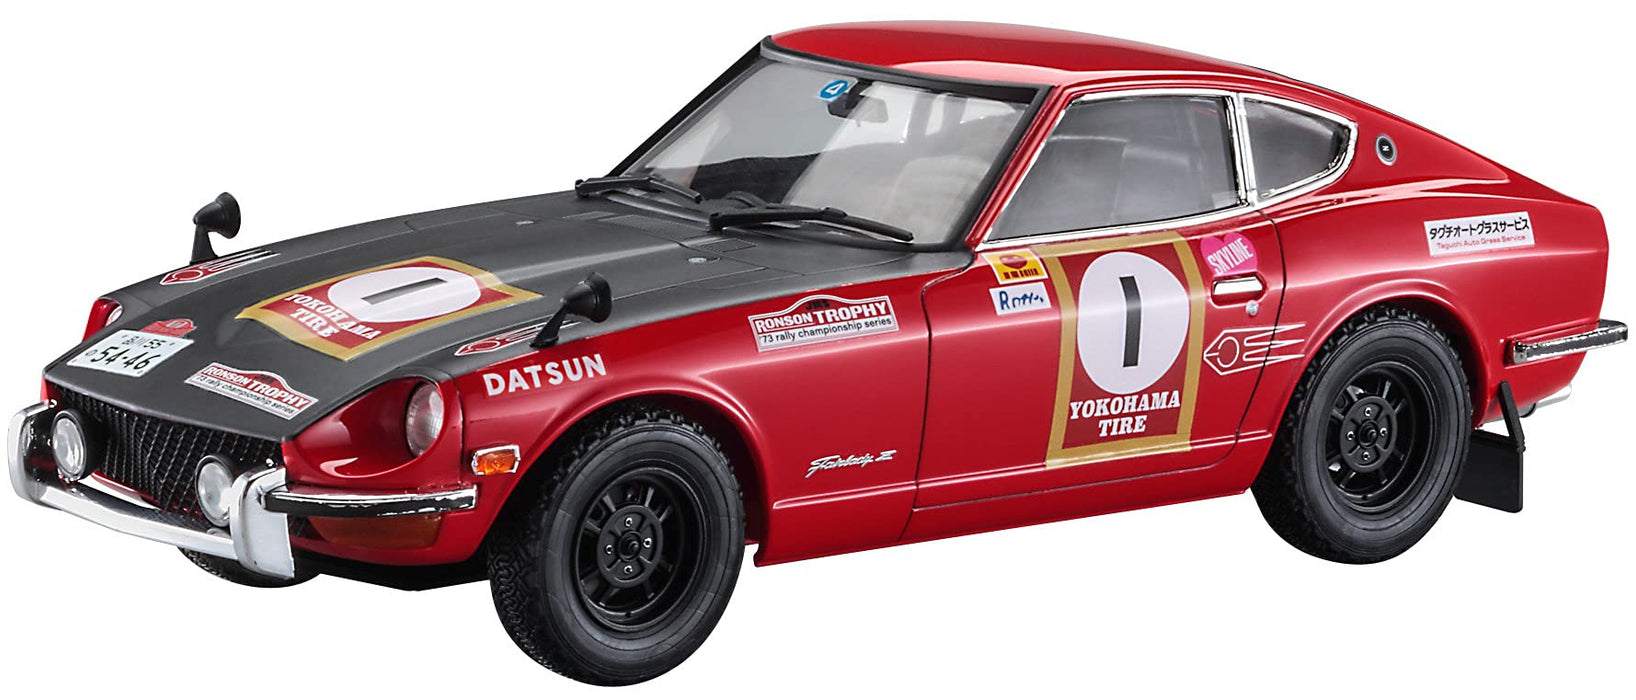 Hasegawa 1/24 Nissan Fairlady Z 1973 Tacs Clover Rally Winner Kunststoff-Autobausatz